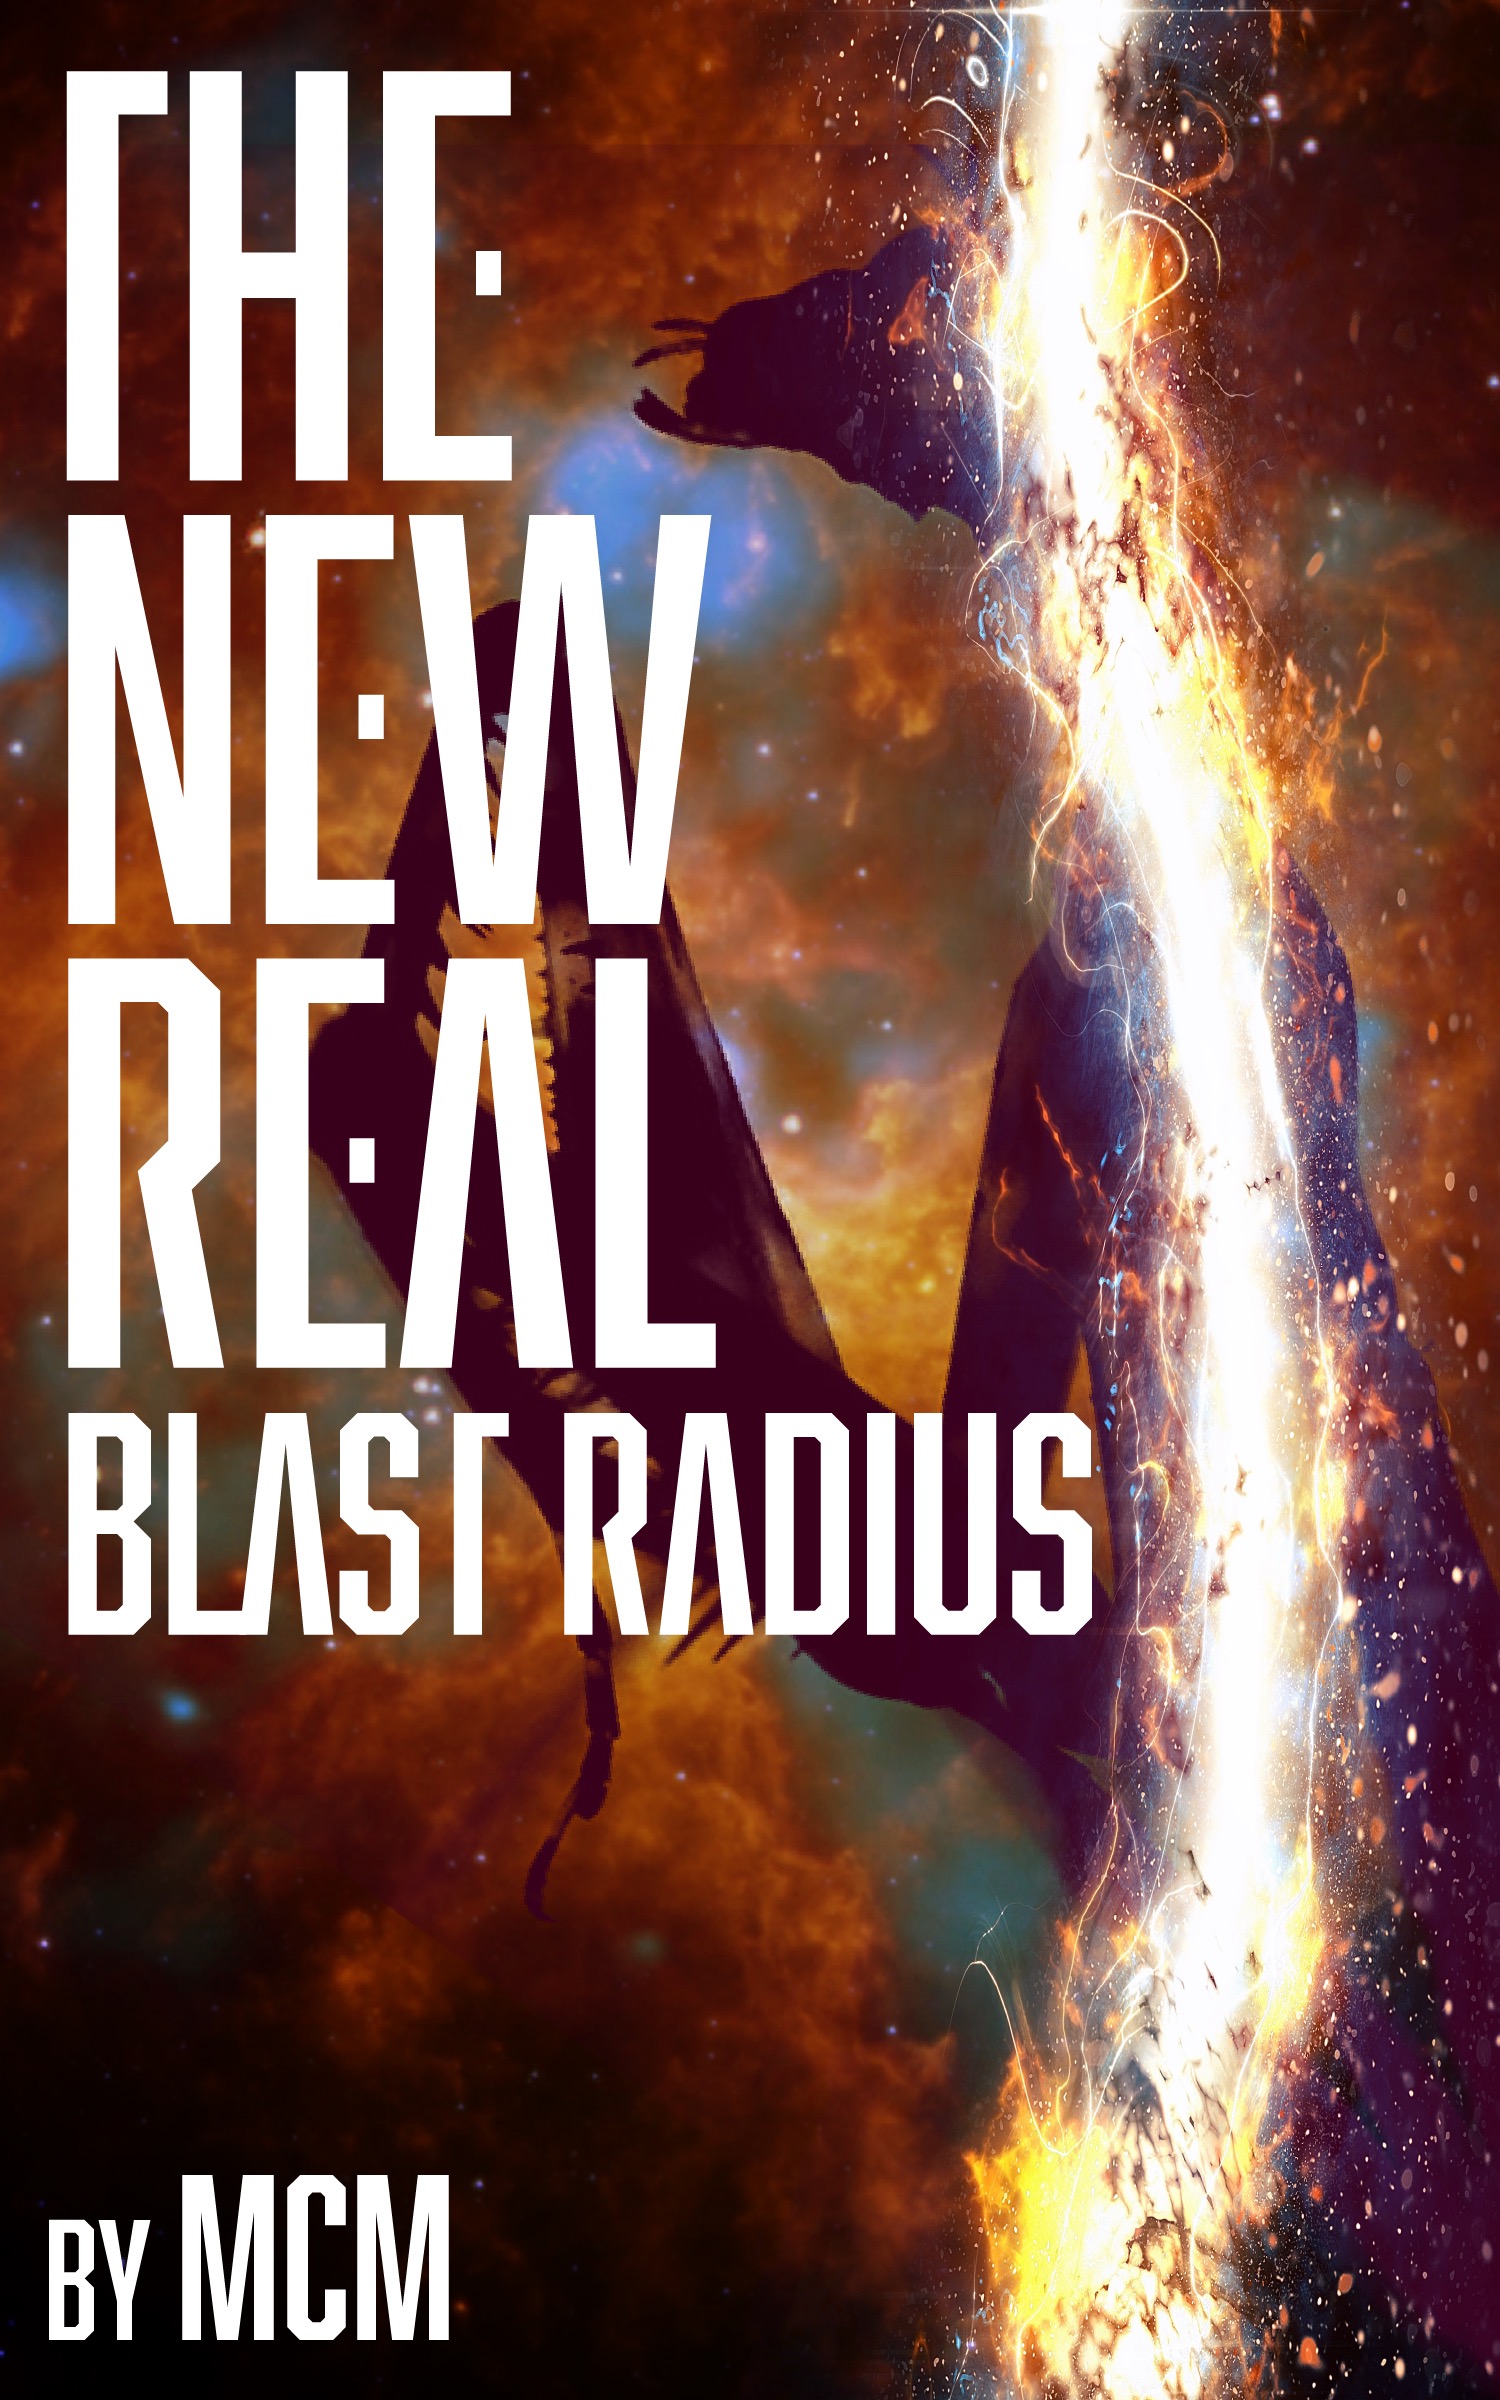 Thoughts on Blast Radius